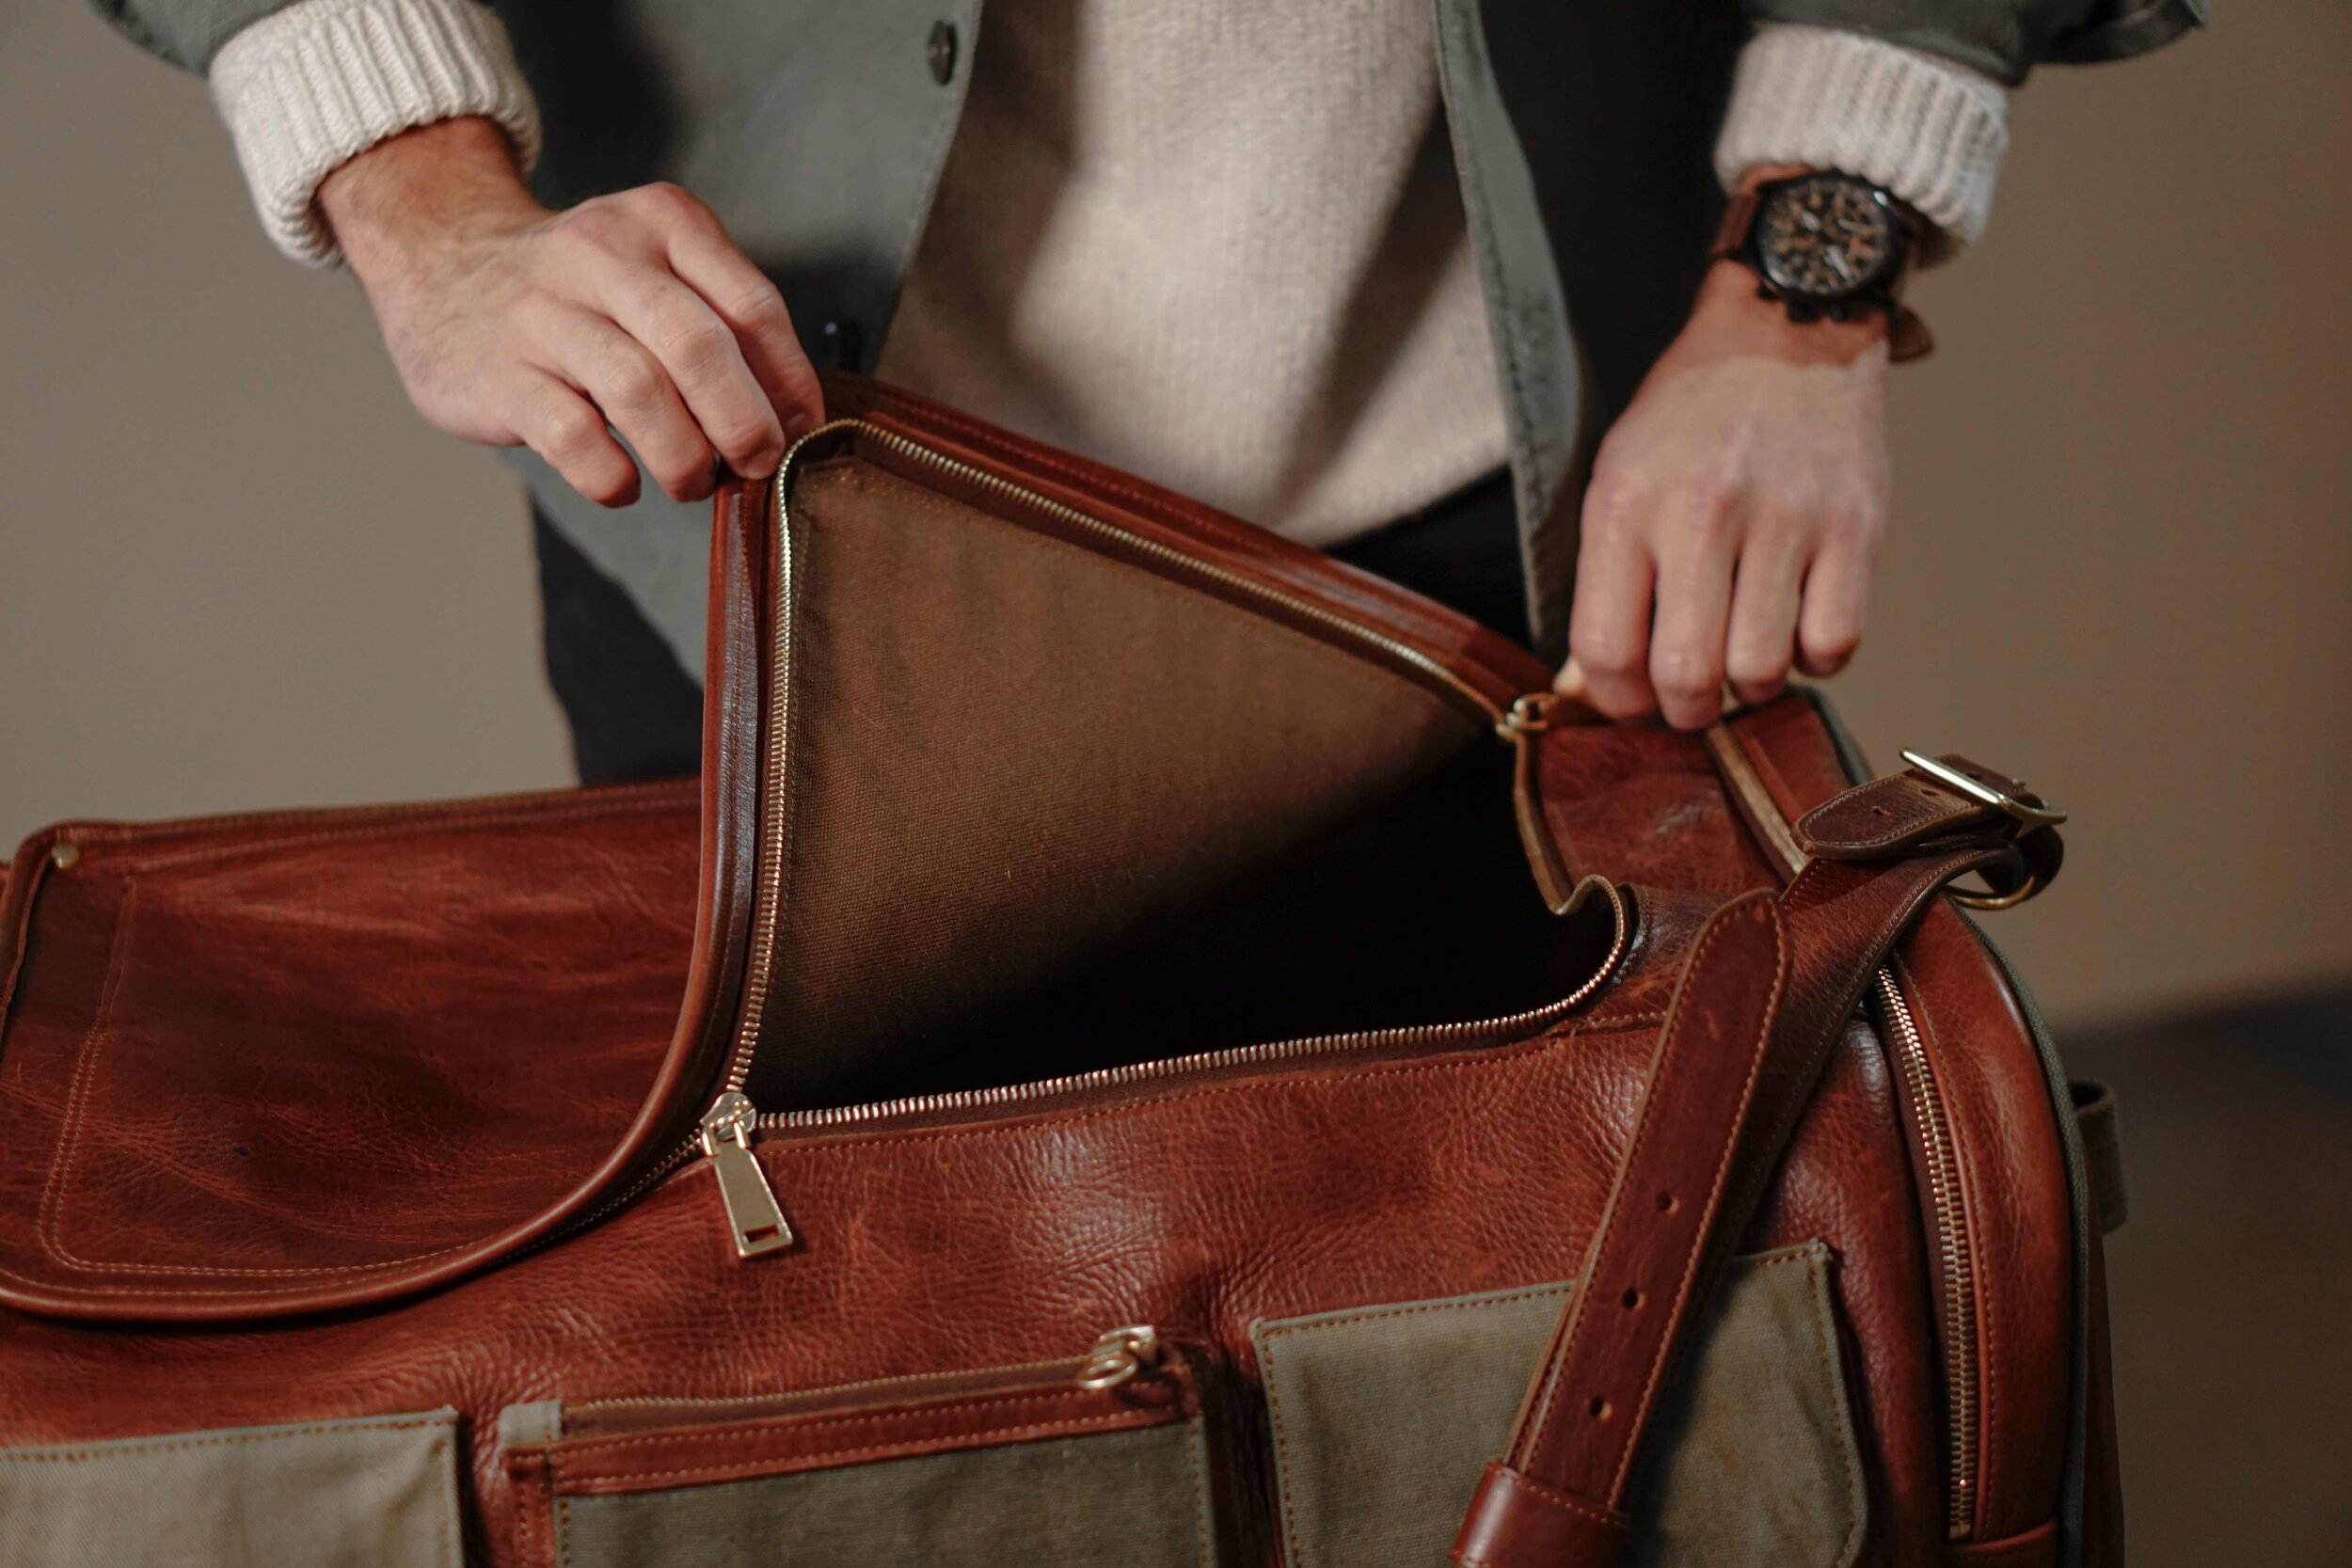 The Bourdain Leather Duffle Bag